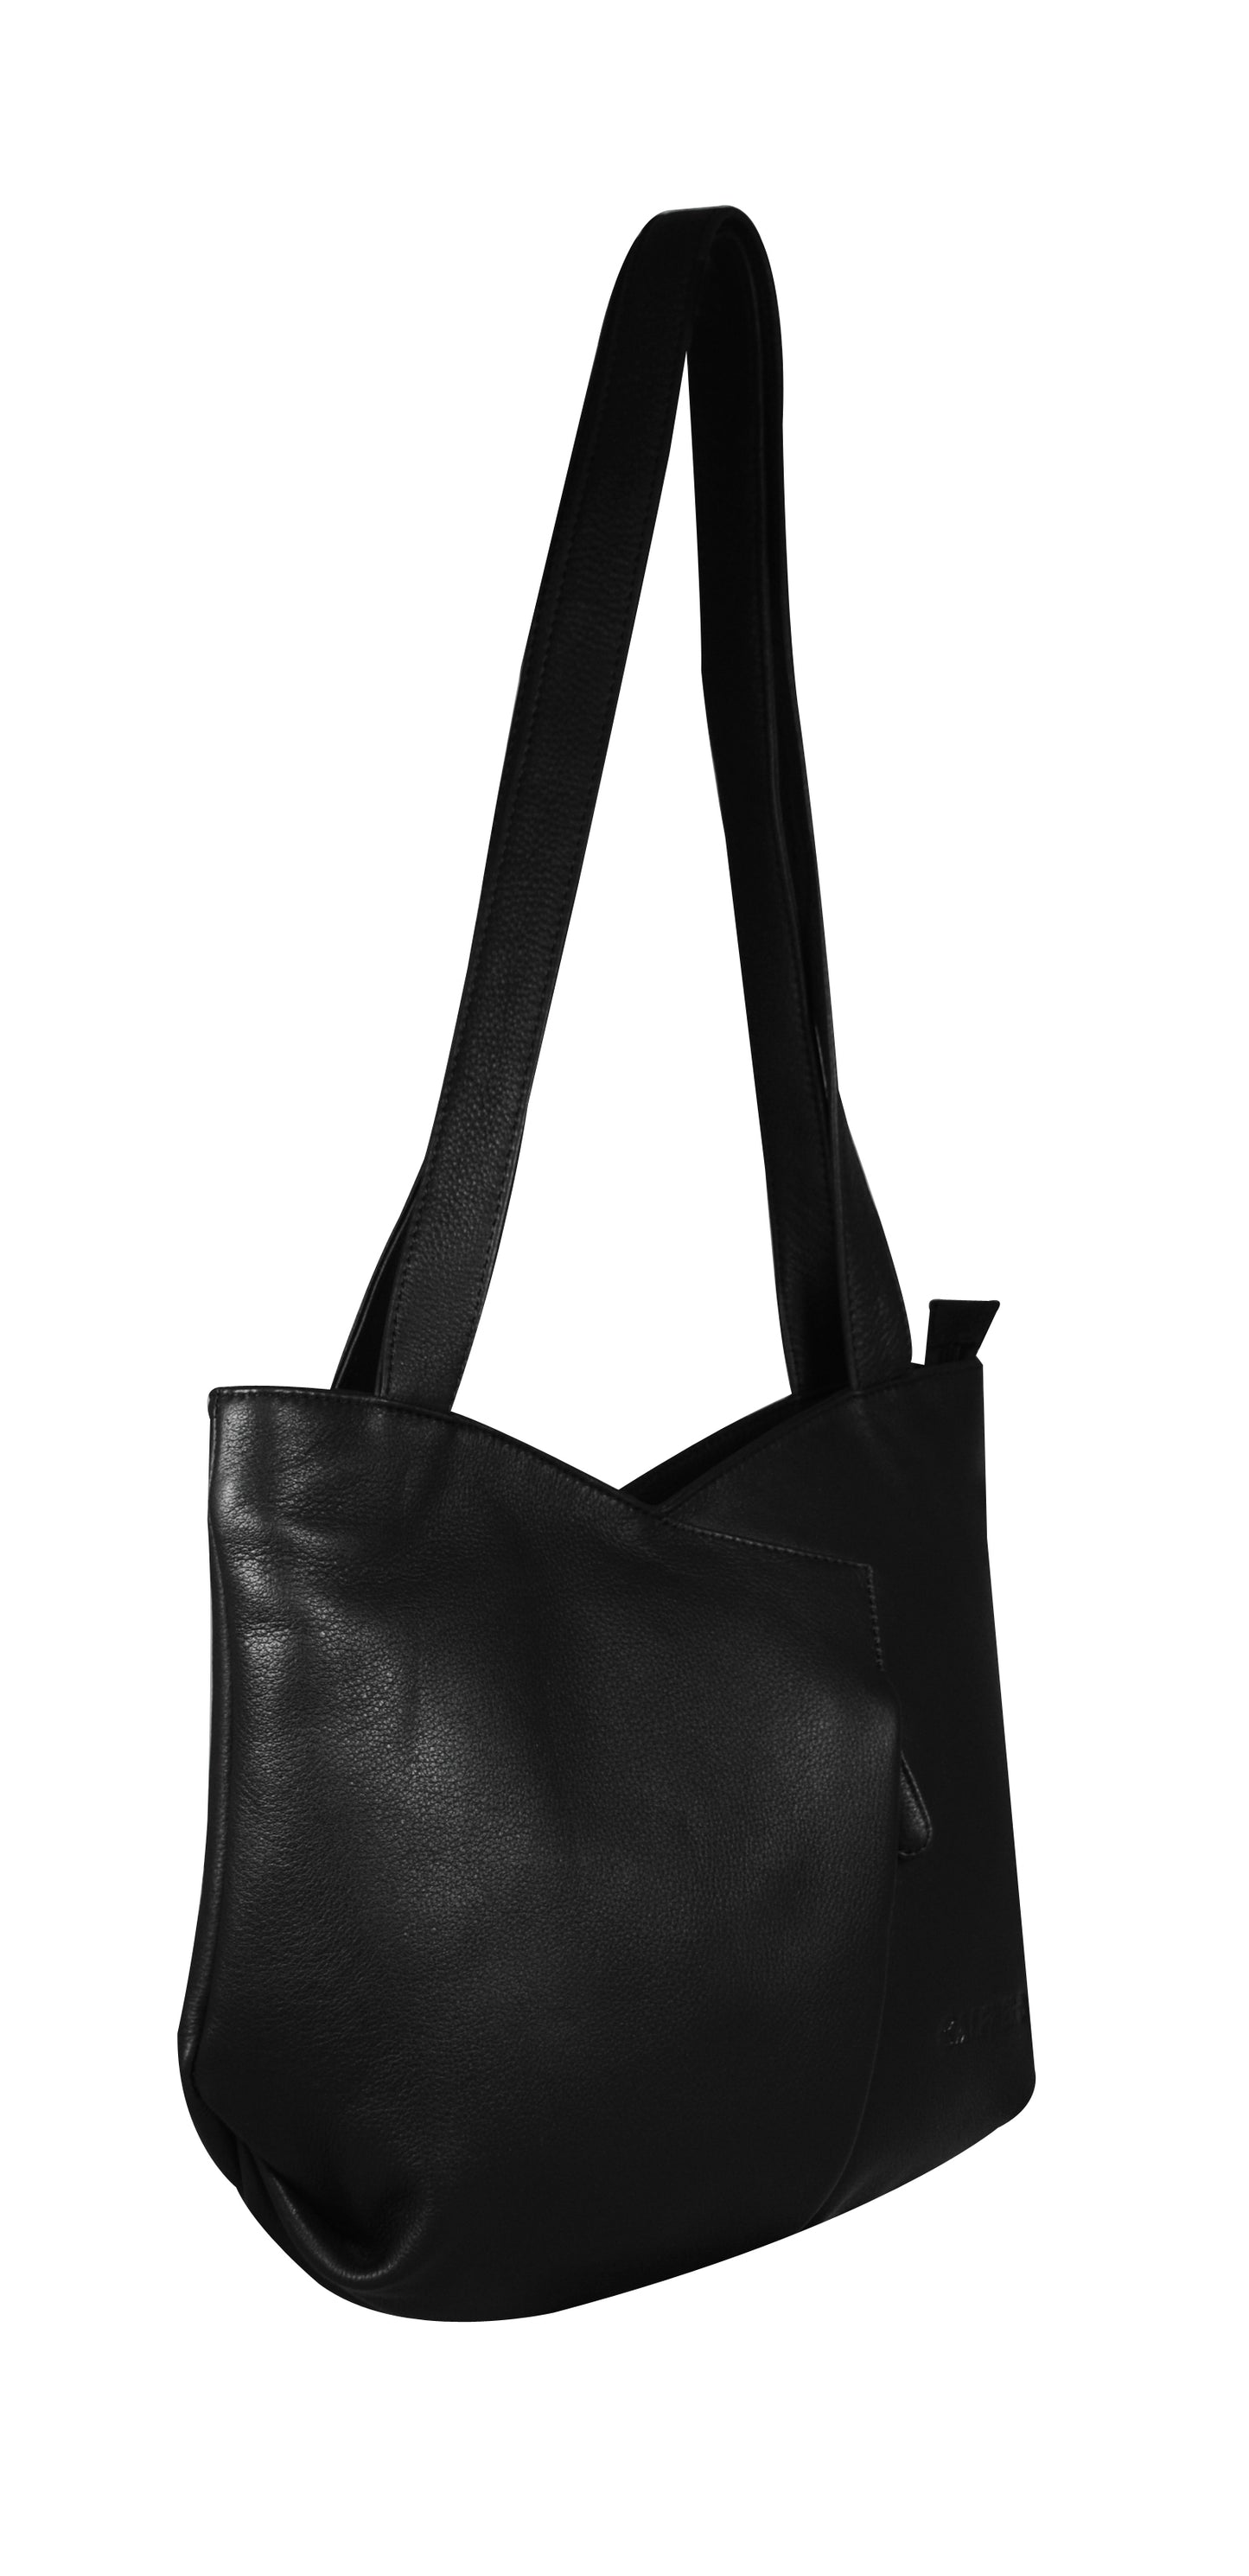 Calfnero Women's Genuine Leather Shoulder Bag (71080-Black)